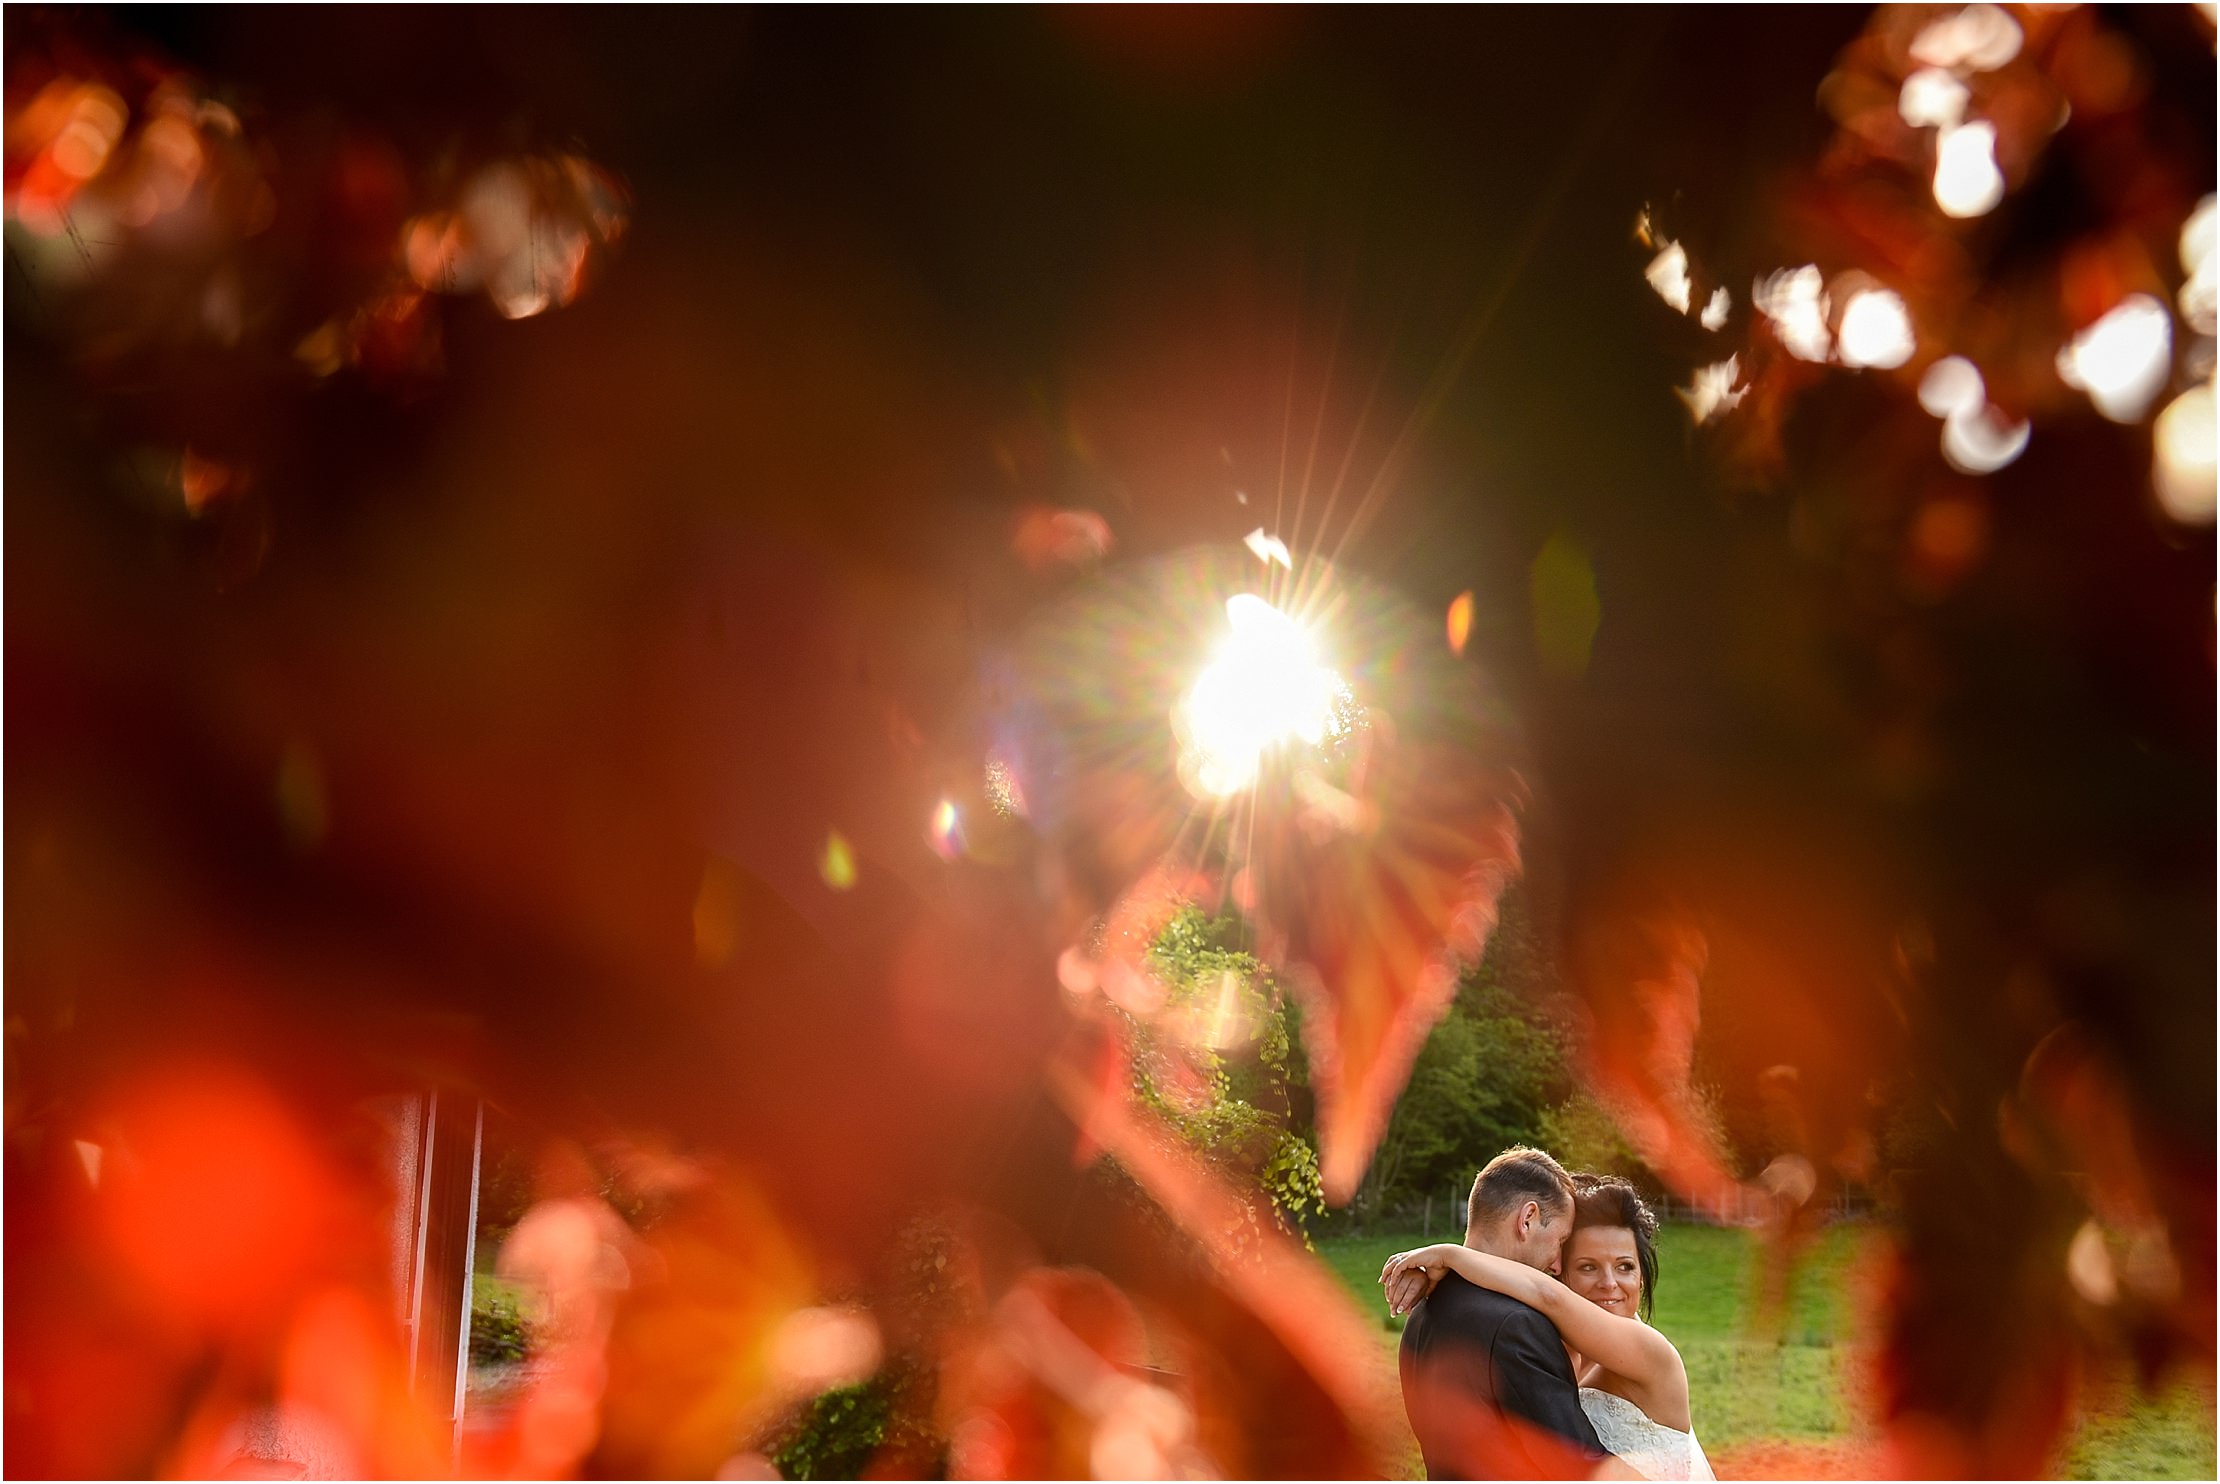 dan-wootton-wedding-photography-2015 - 010.jpg